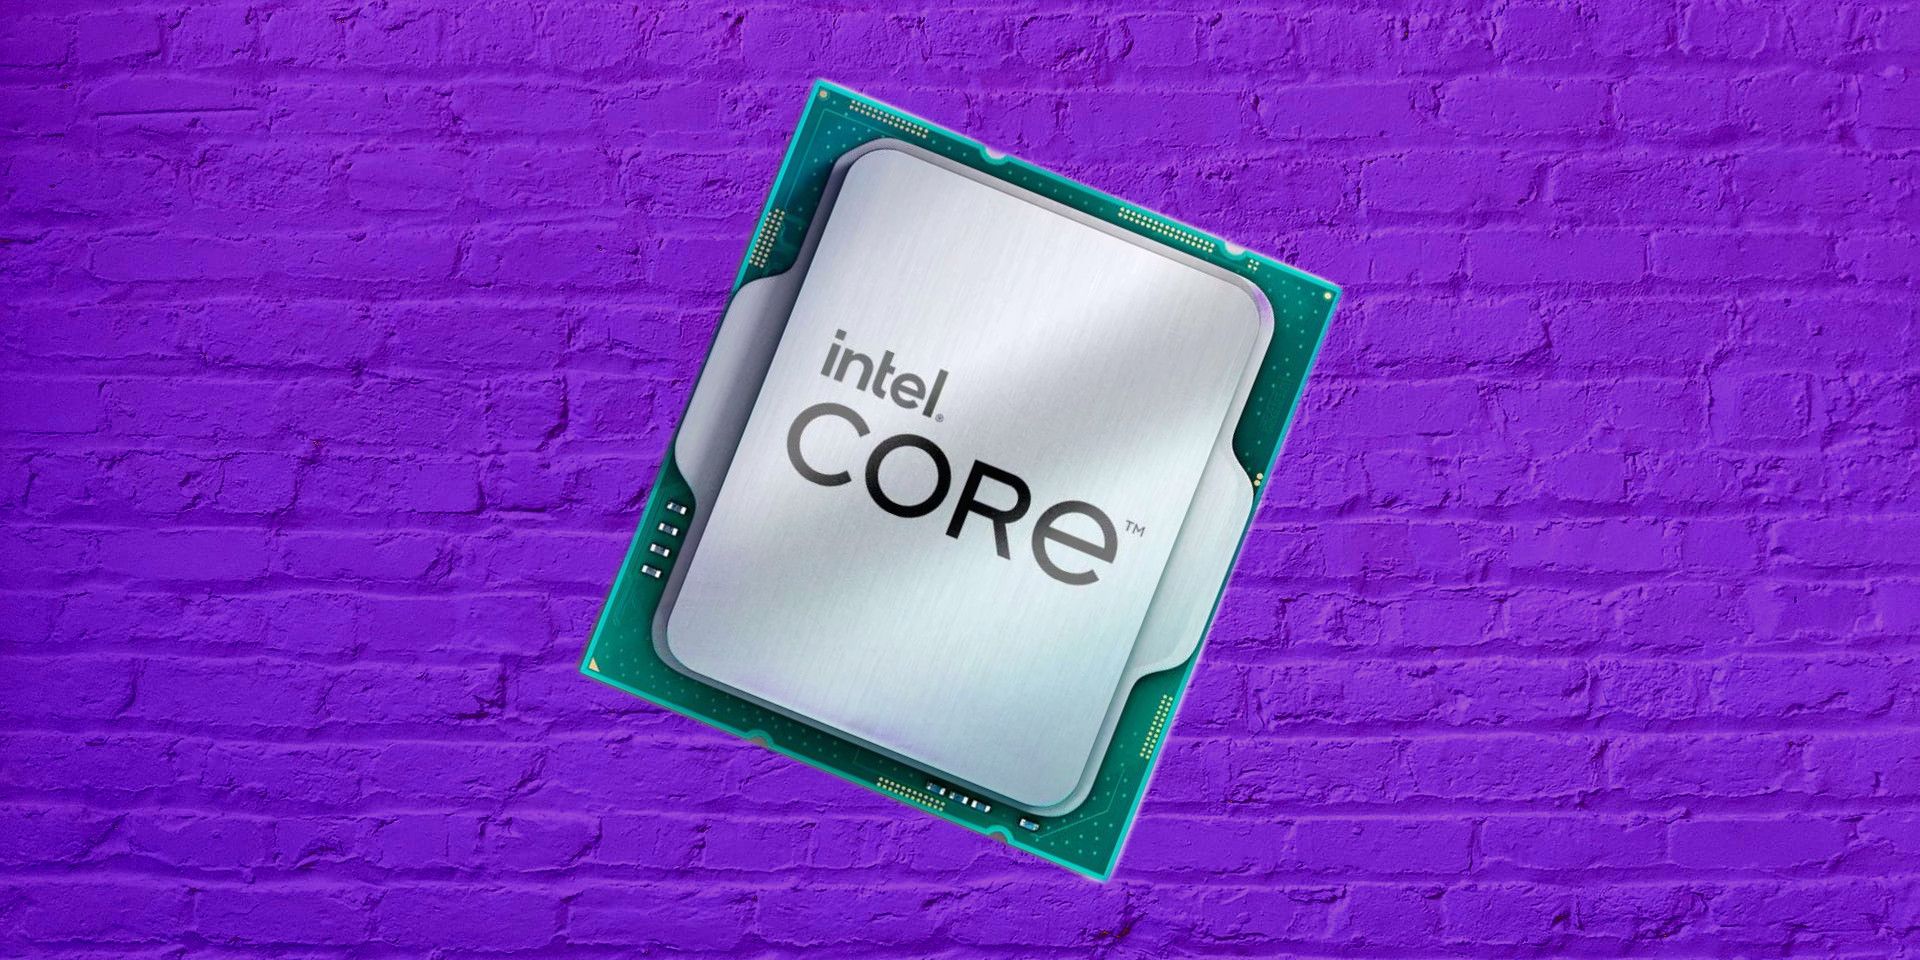 Intel Core chip on custom background